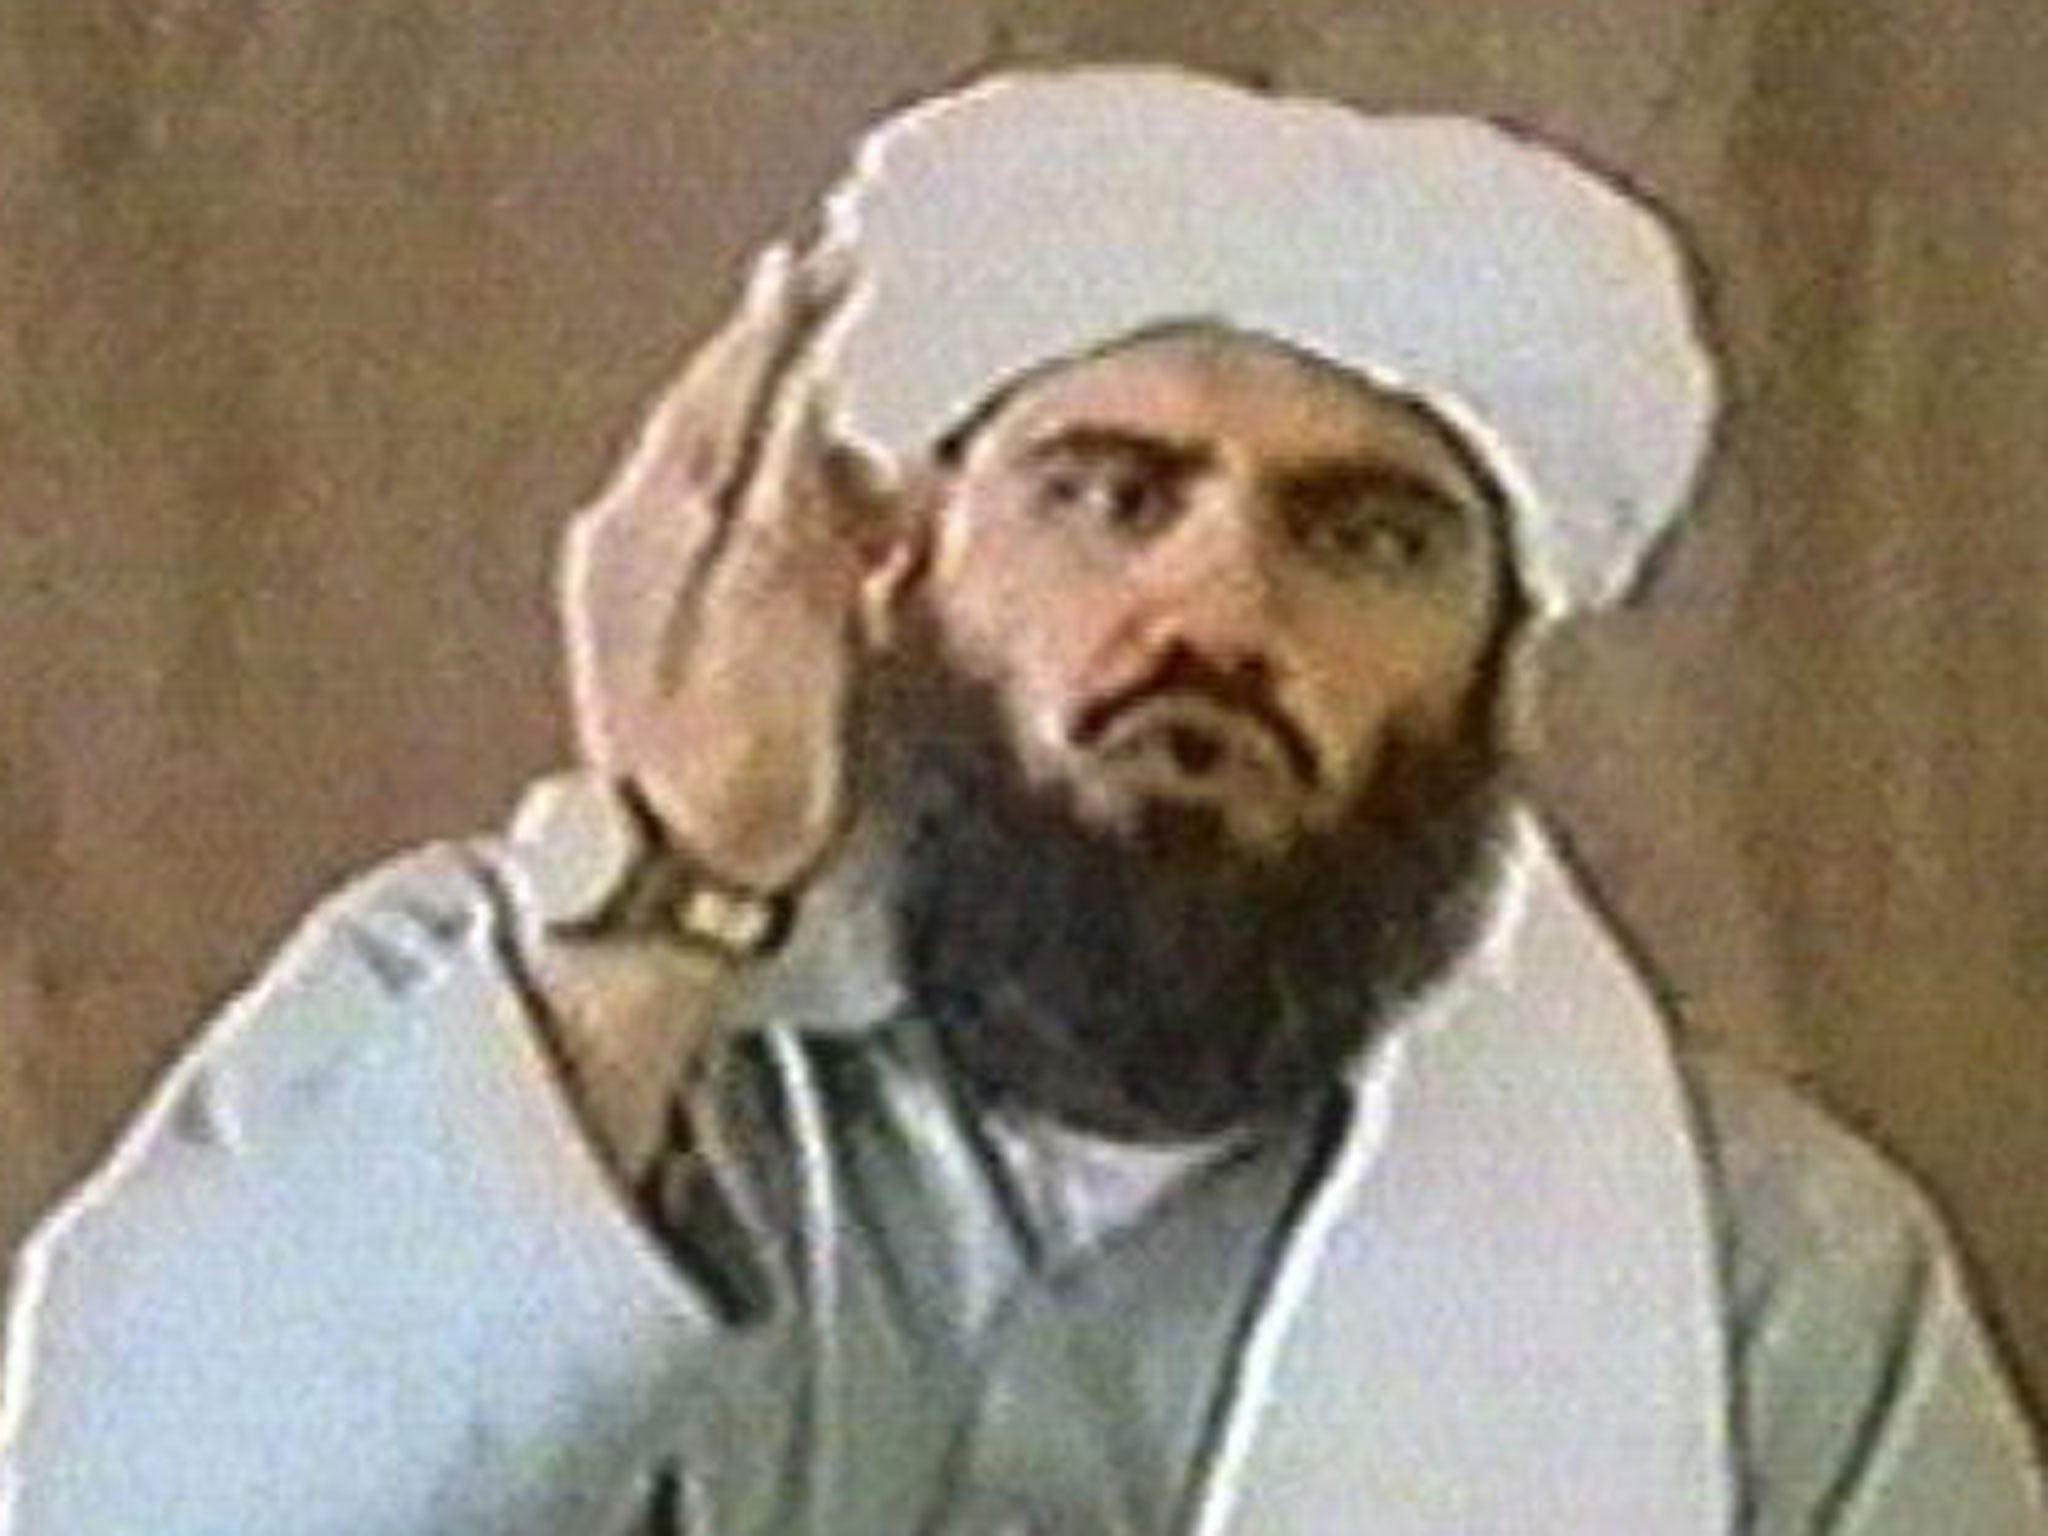 Osama bin Laden's son-in-law and former spokesman, abu Ghaith